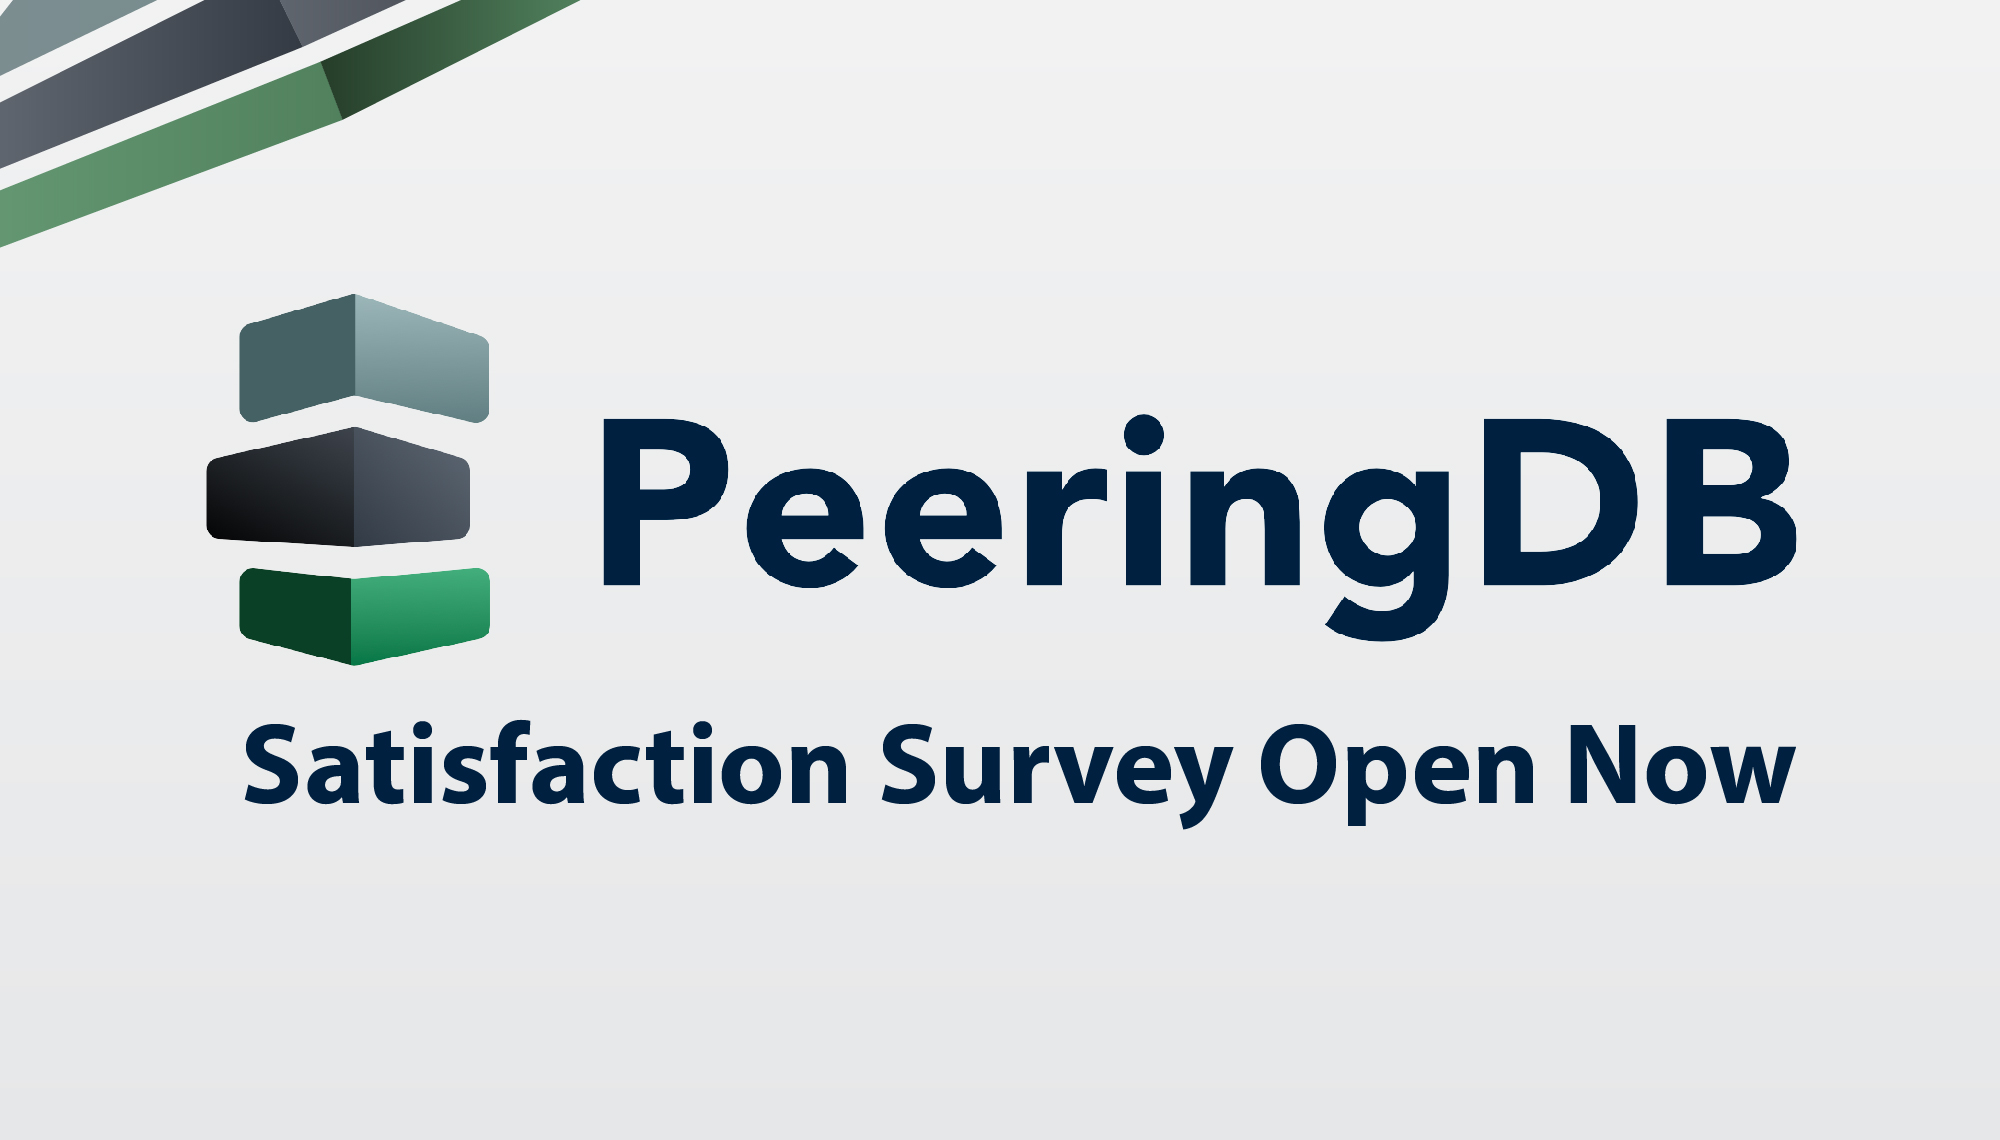 PeeringDB Satisfaction Survey Open Now